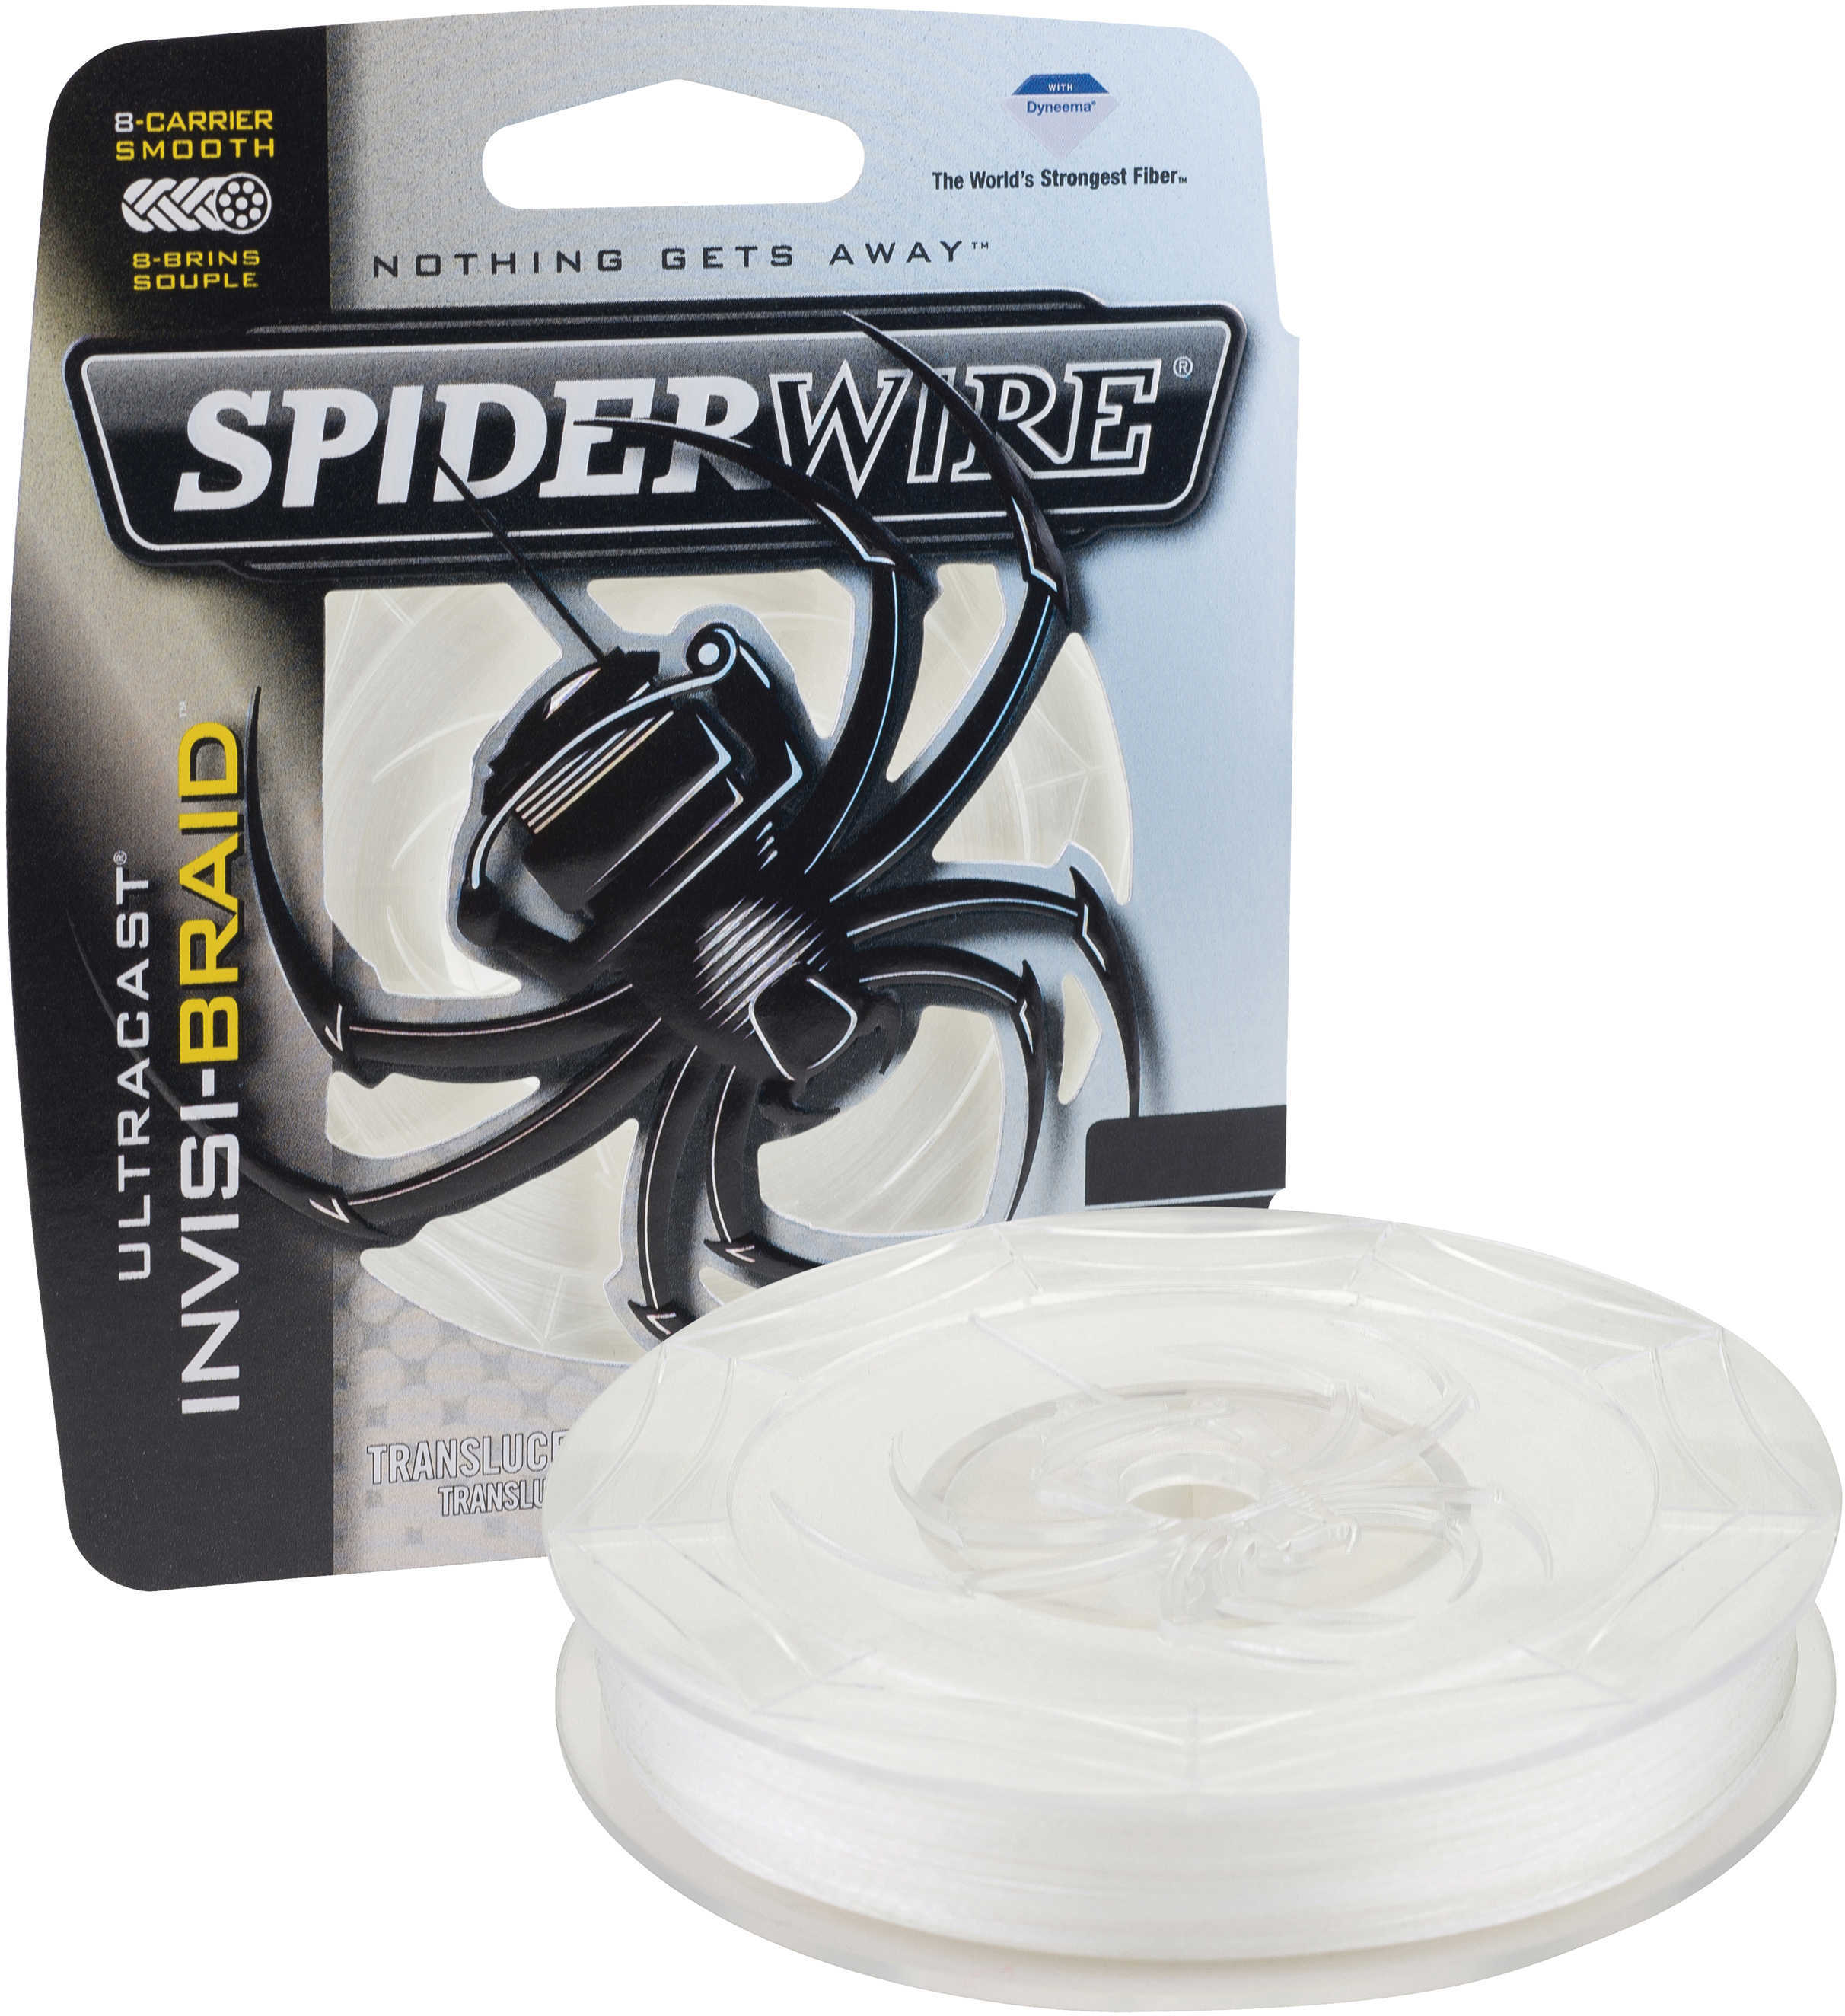 Spiderwire Ultracast Invisi-Braid 65 lb, 300 Yards Md: 1339674